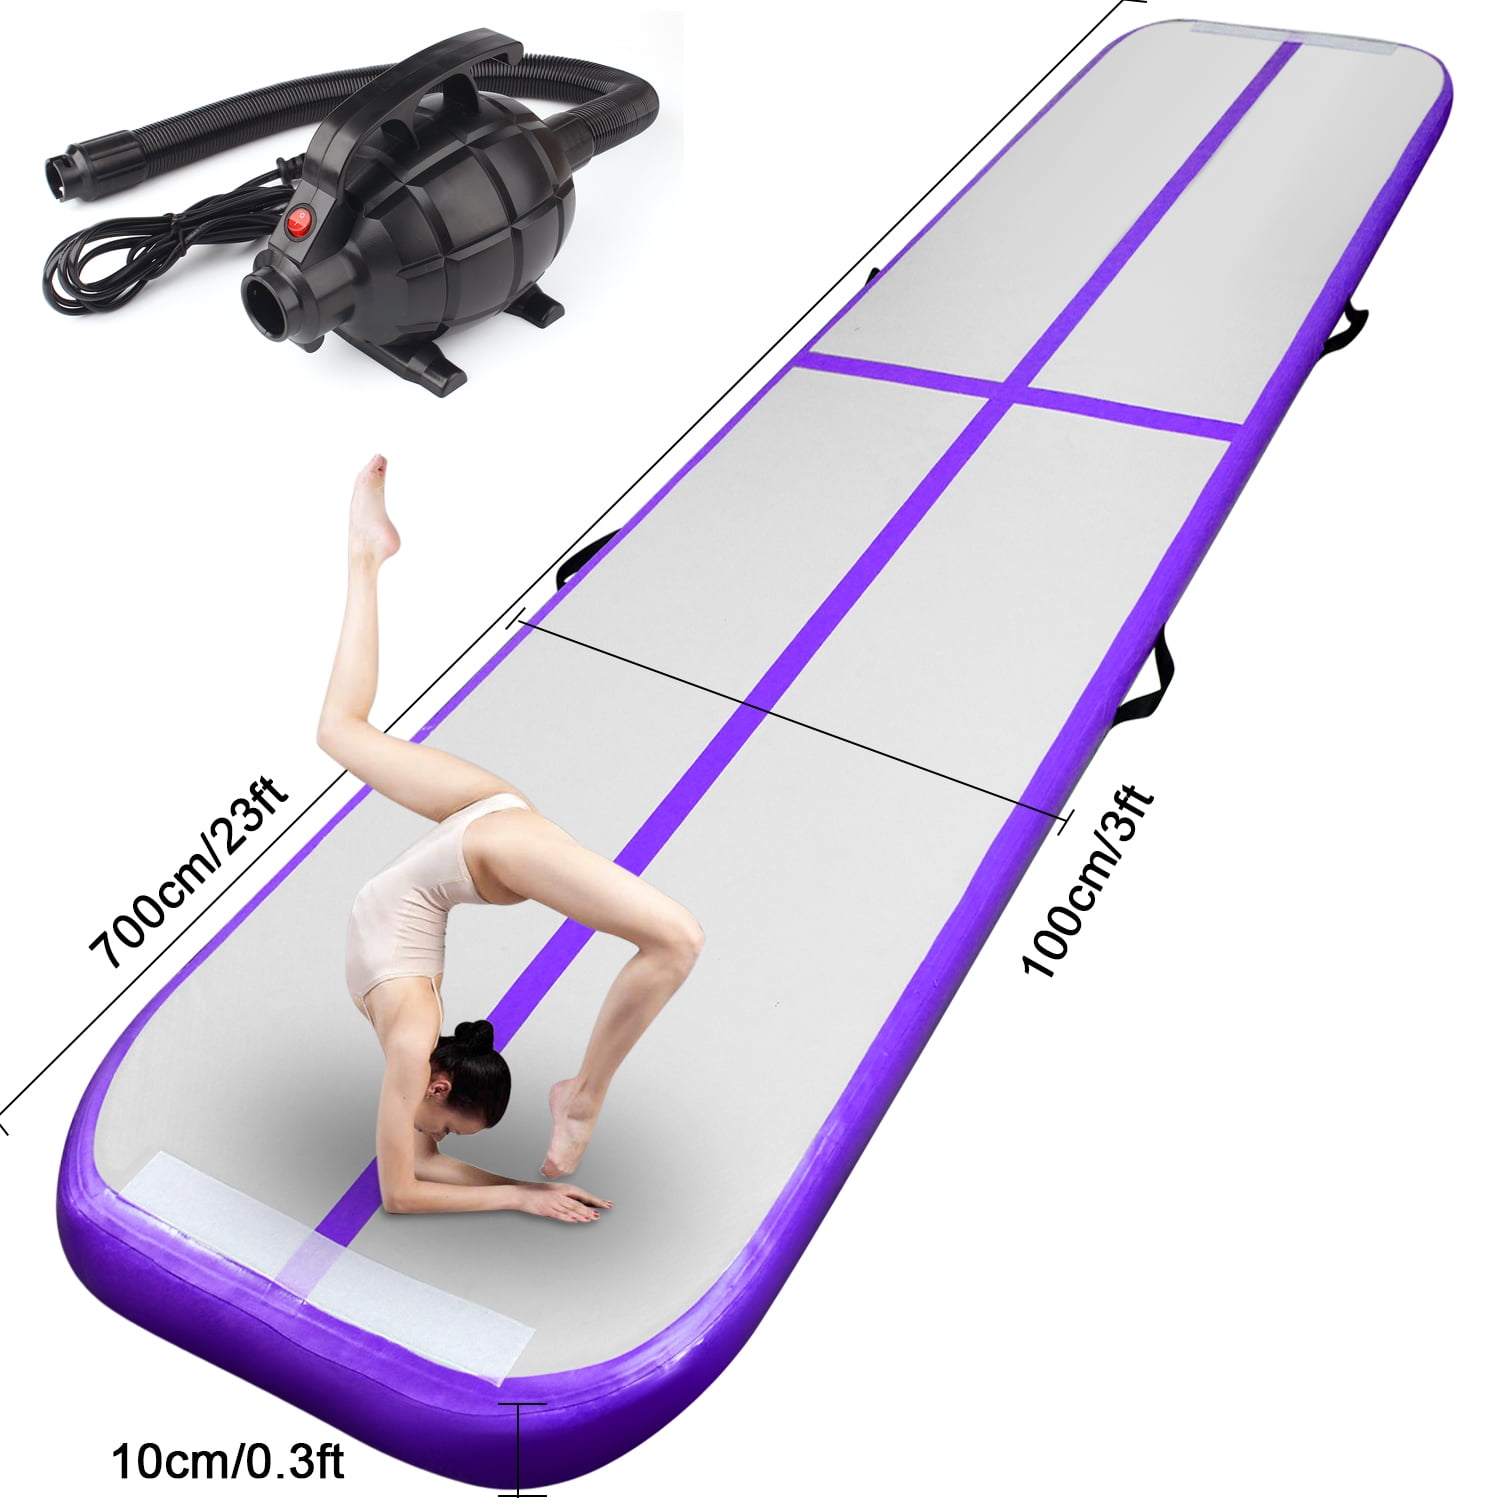 3/4 x 1M Inflatable Air Track Tumbling Gymnastic Mat Floor Home Training W/ Pump 